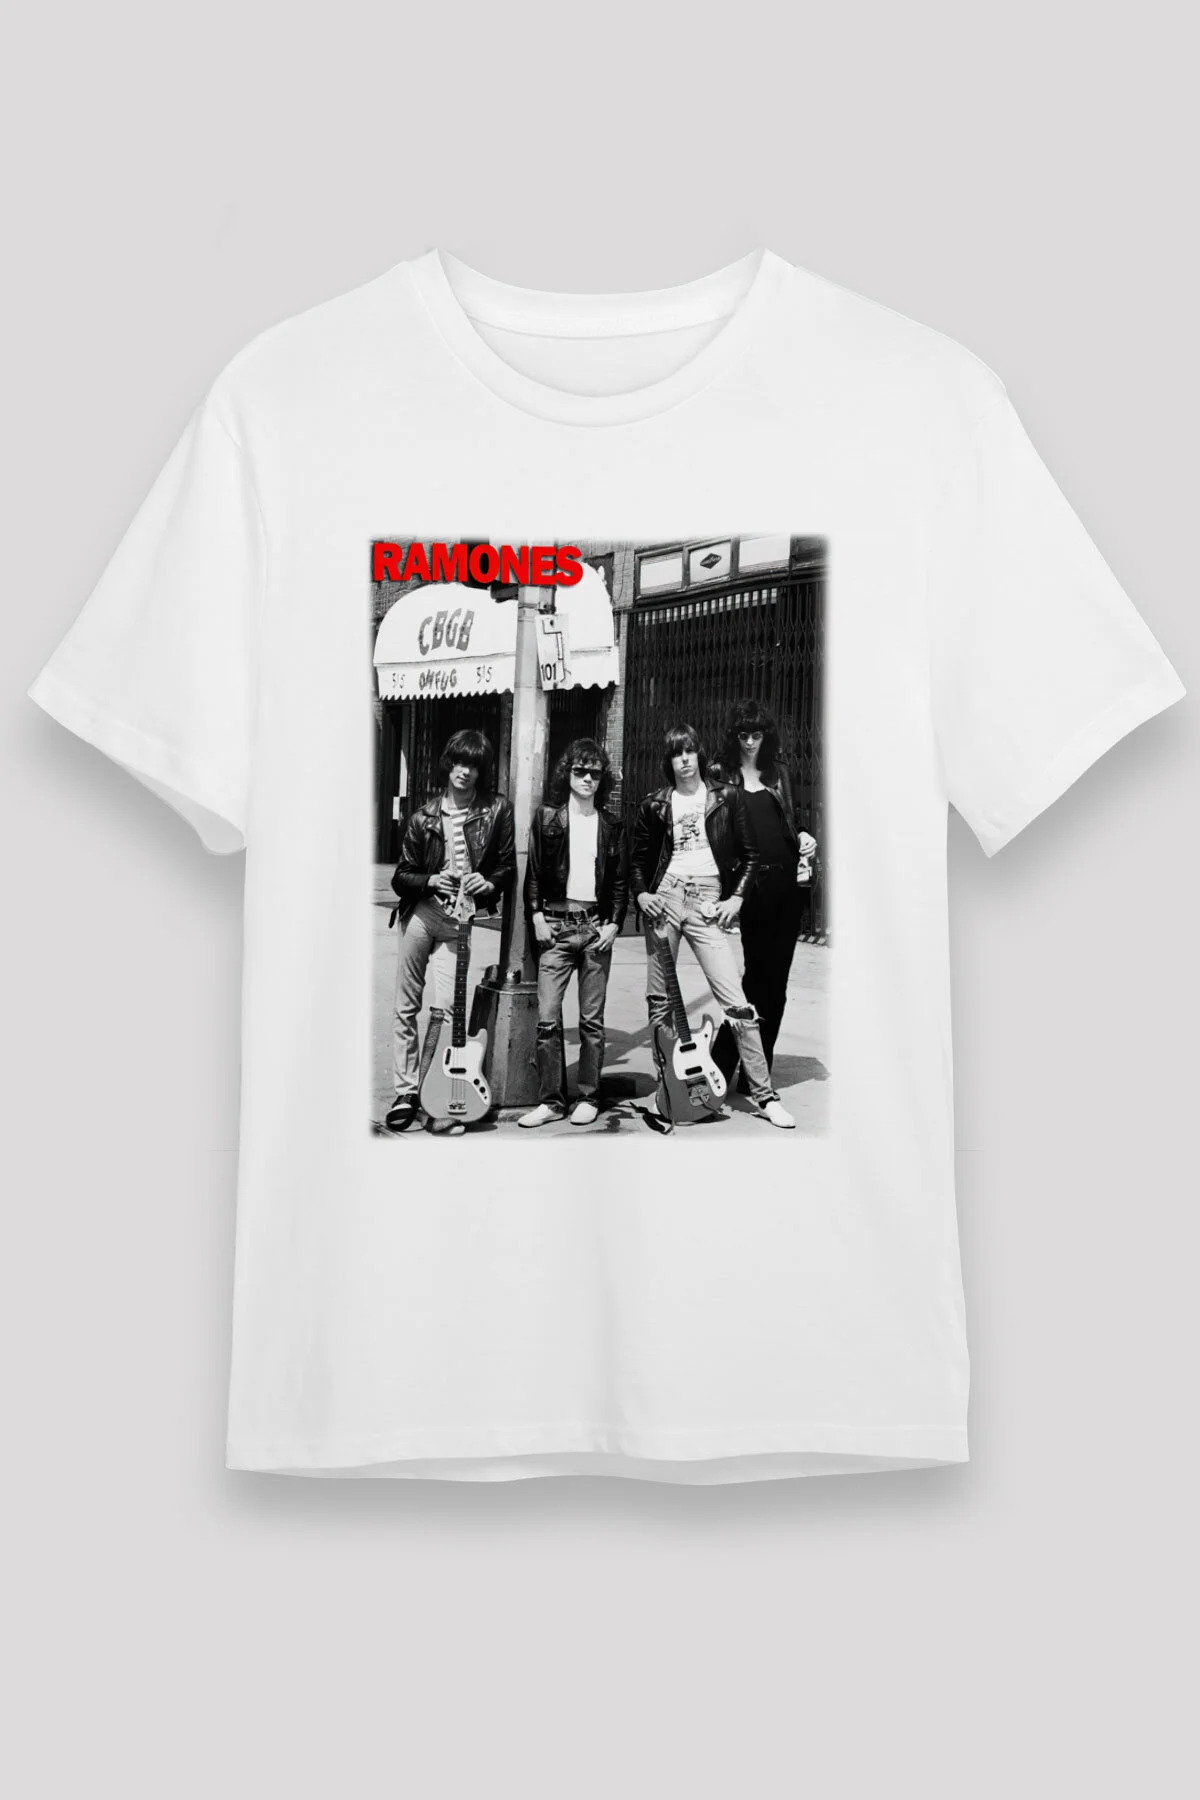 Ramones T shirt,Music Band,Unisex Tshirt 19